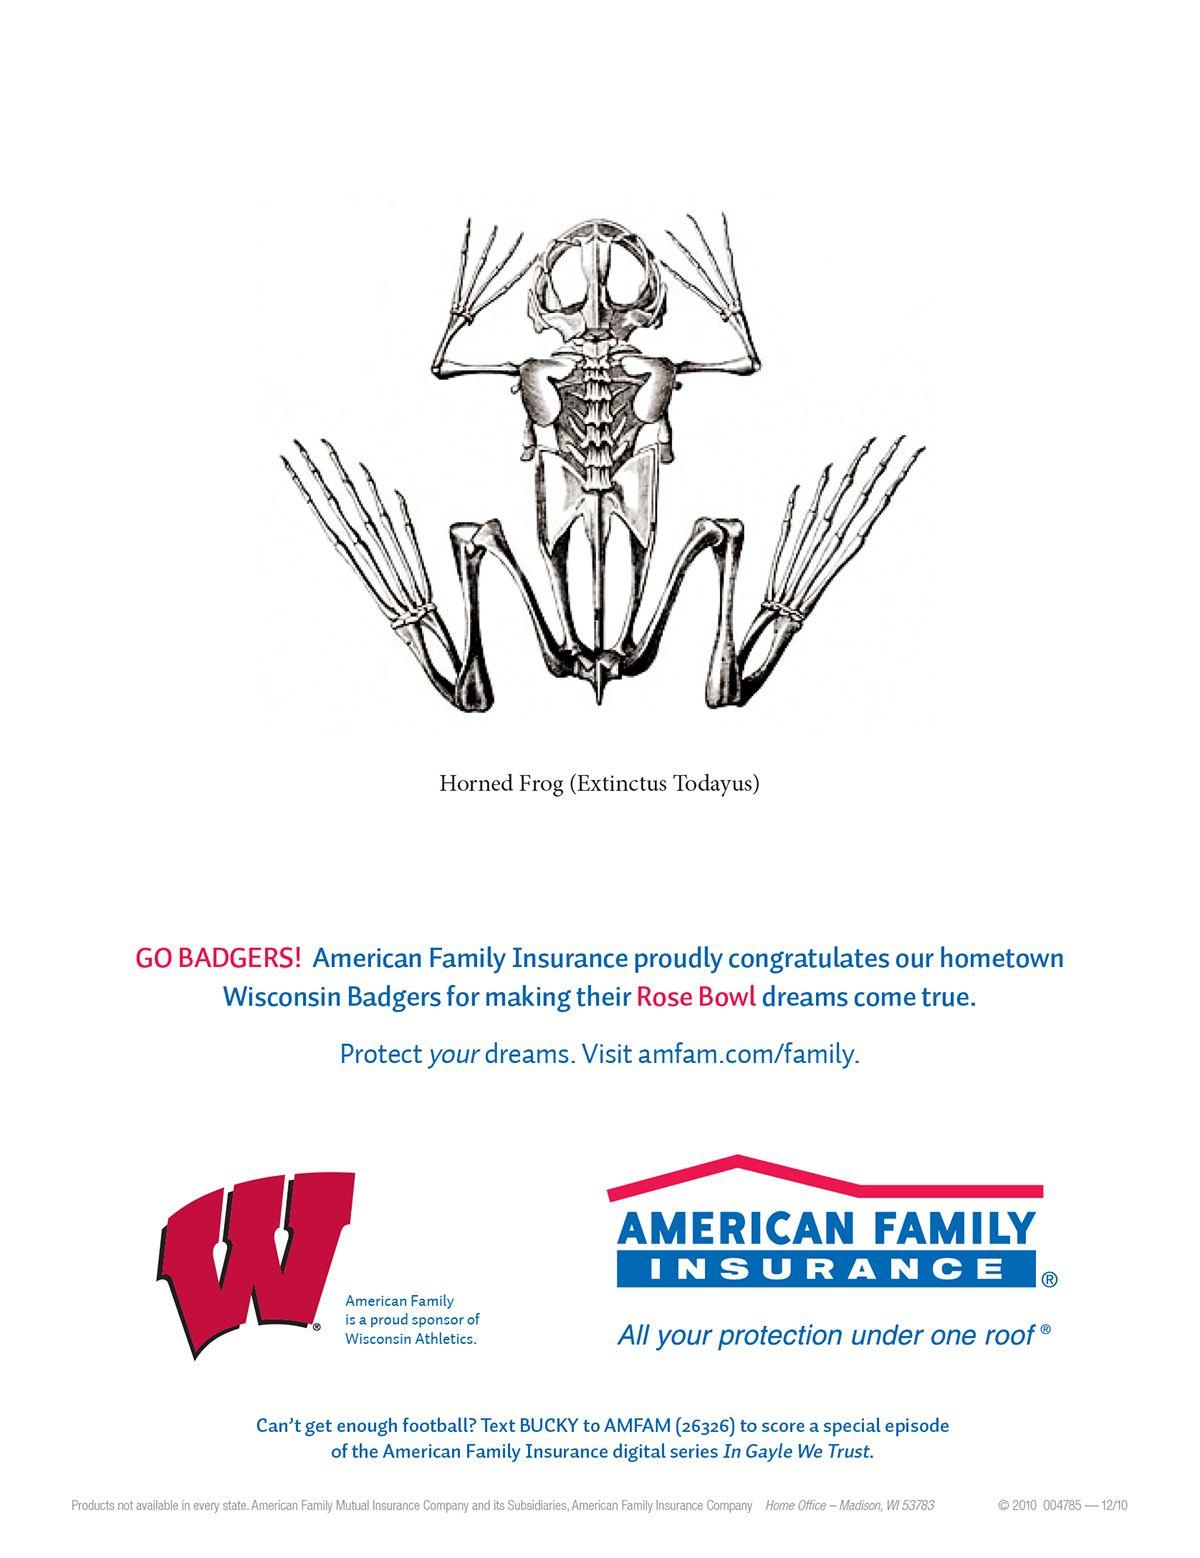 AmFam Roof Logo - Print ads for American Family Insurance on Behance